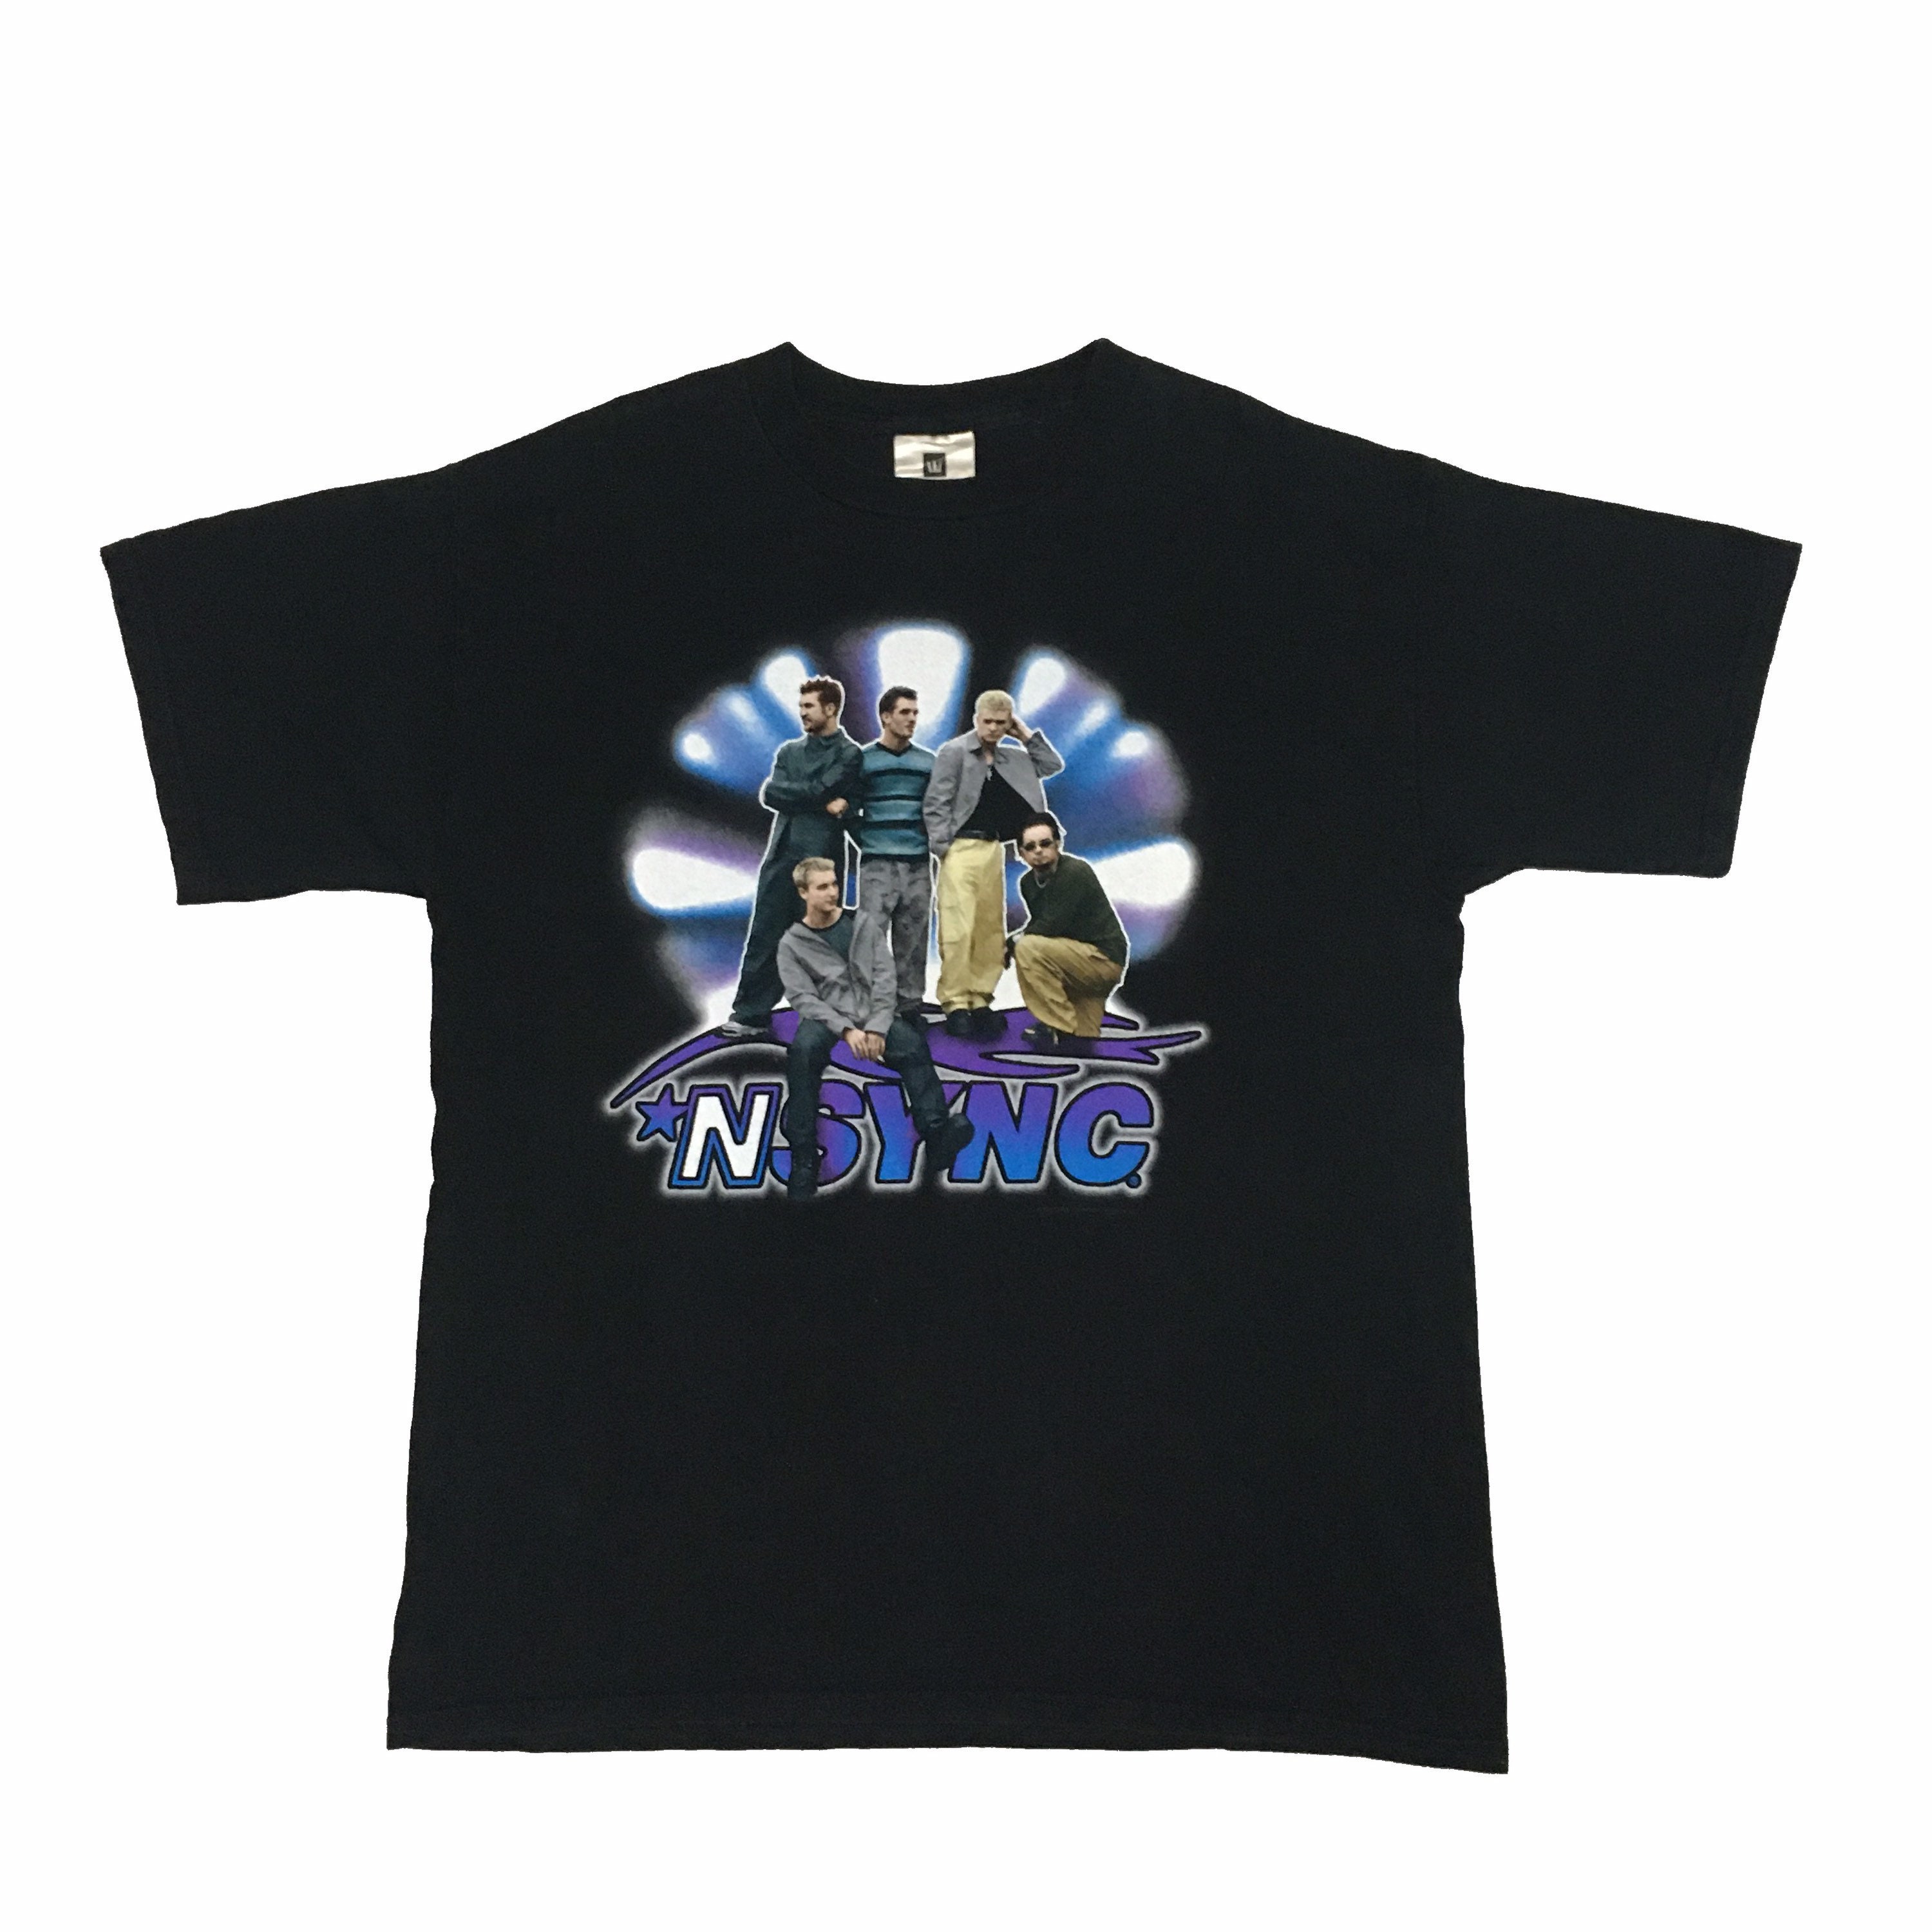 Discover Vintage1999s Nsync T-shirt